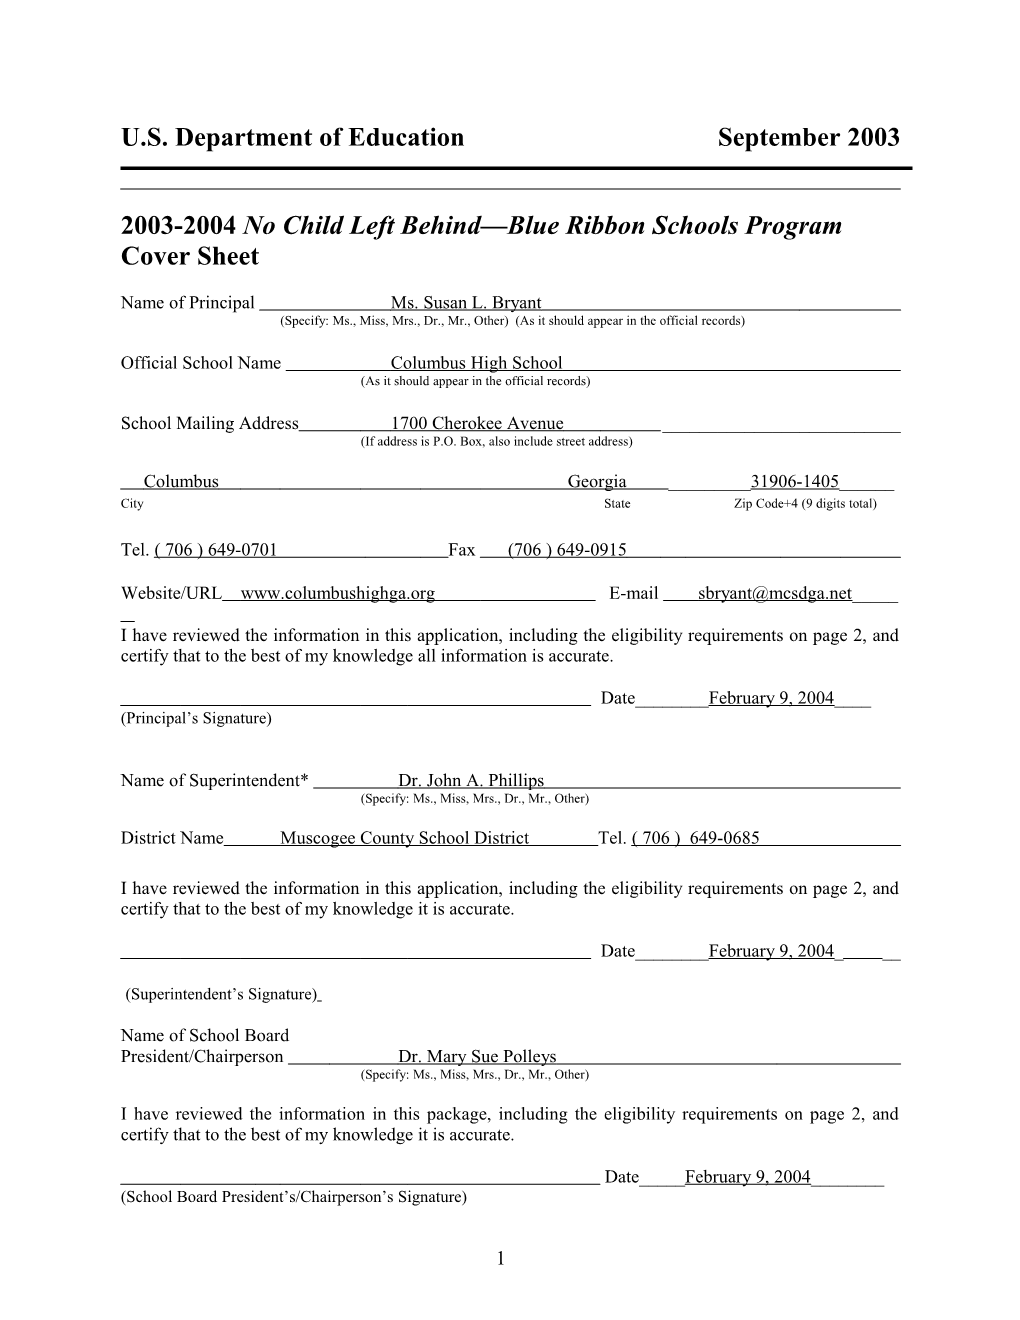 Columbus High School 2004 No Child Left Behind-Blue Ribbon School Application (Msword)